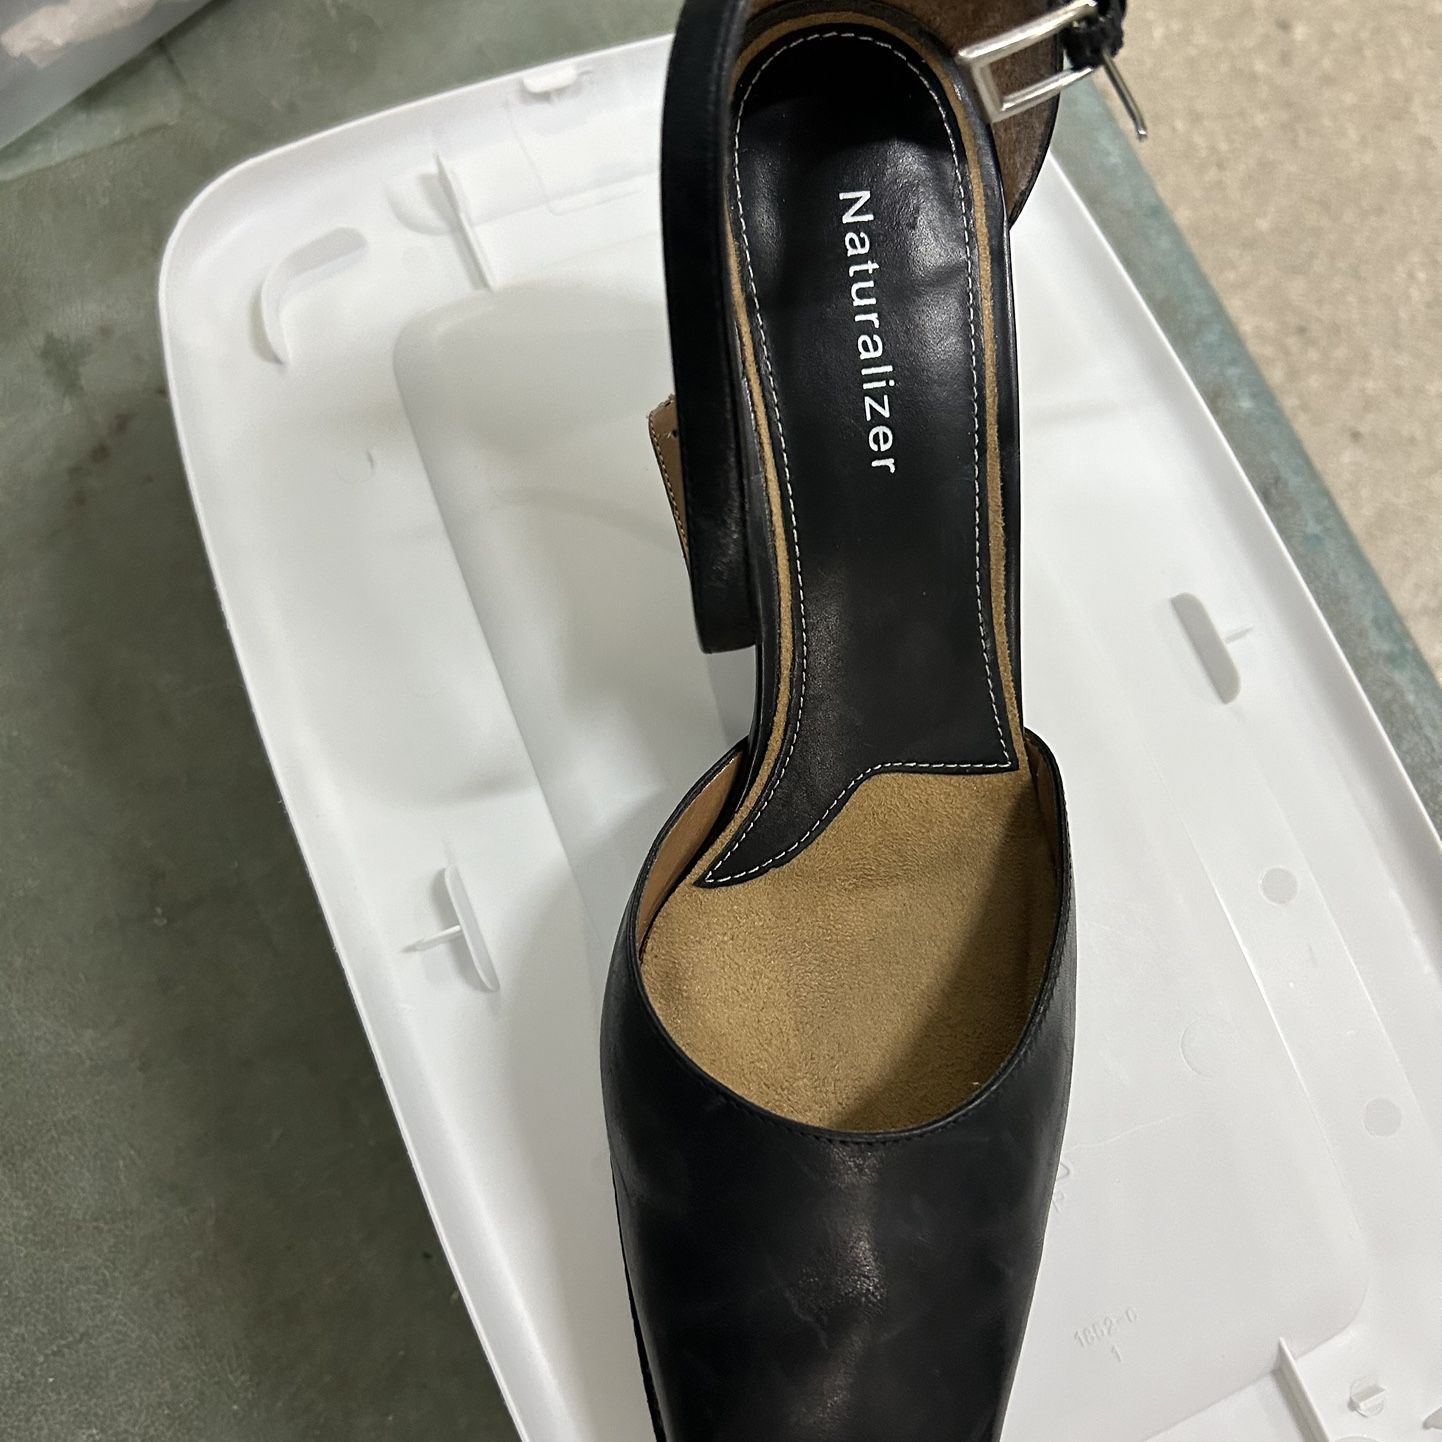 Woman’s Shoe